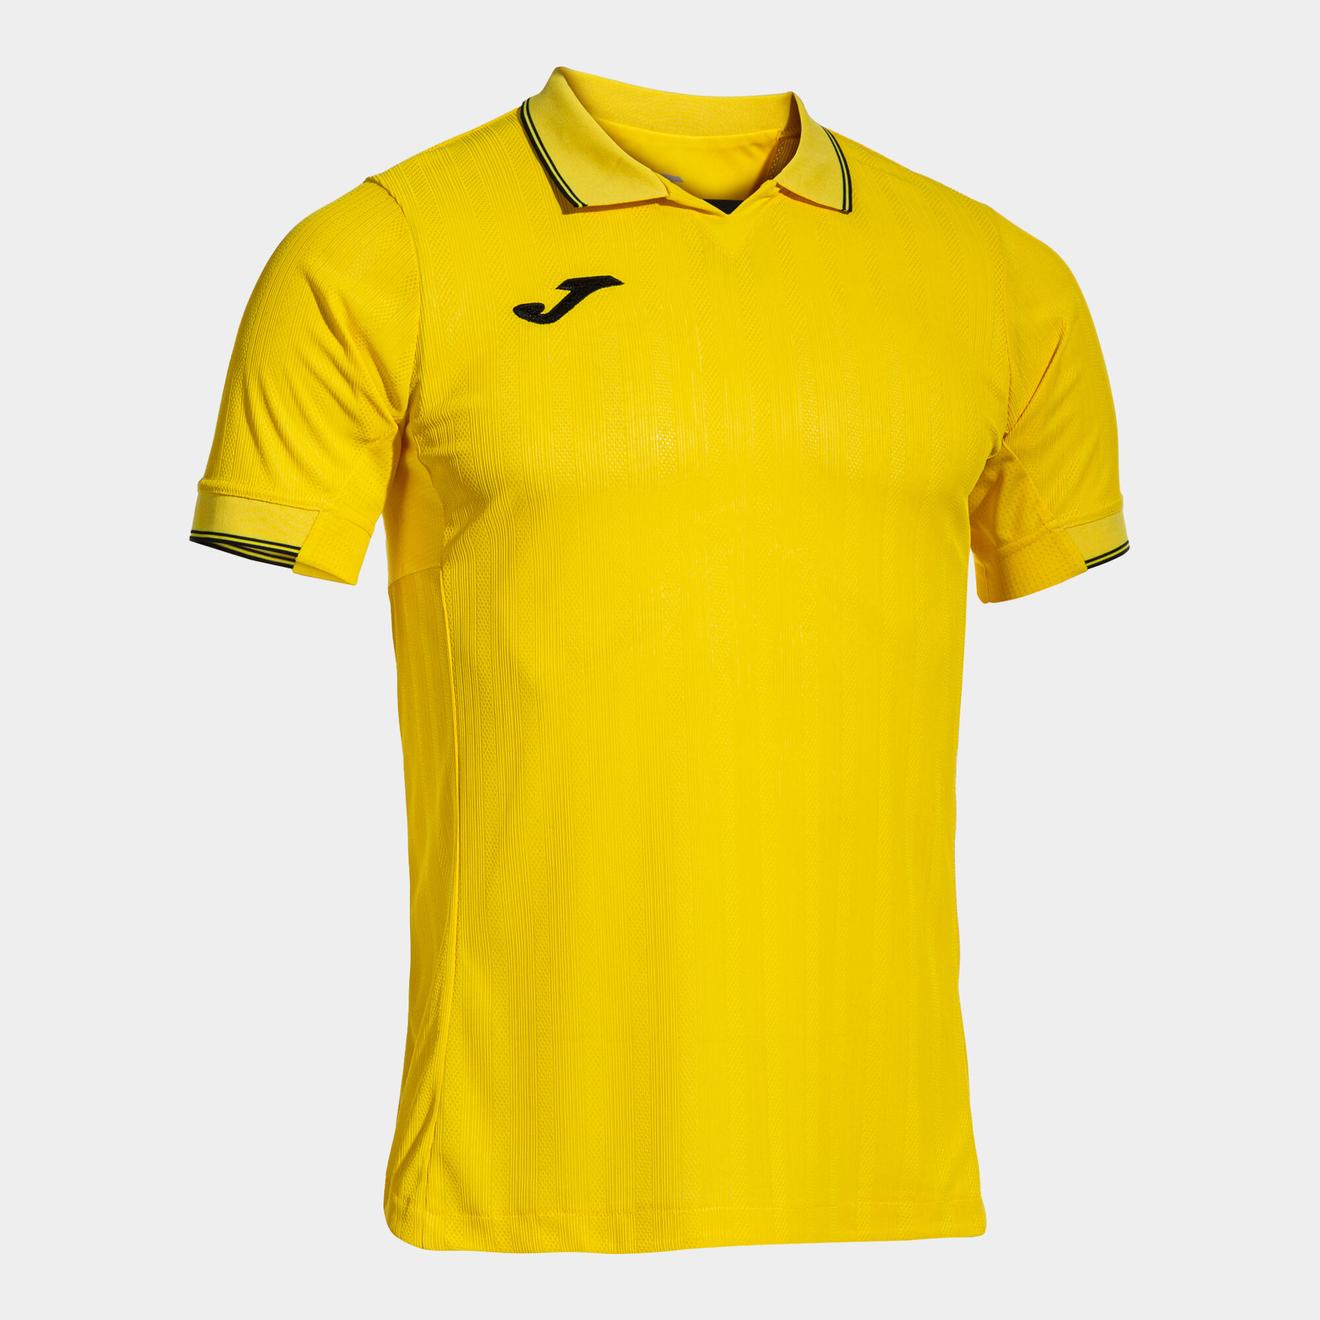 Oferta de Camiseta manga corta hombre Fit one amarillo por $26,96 en Joma